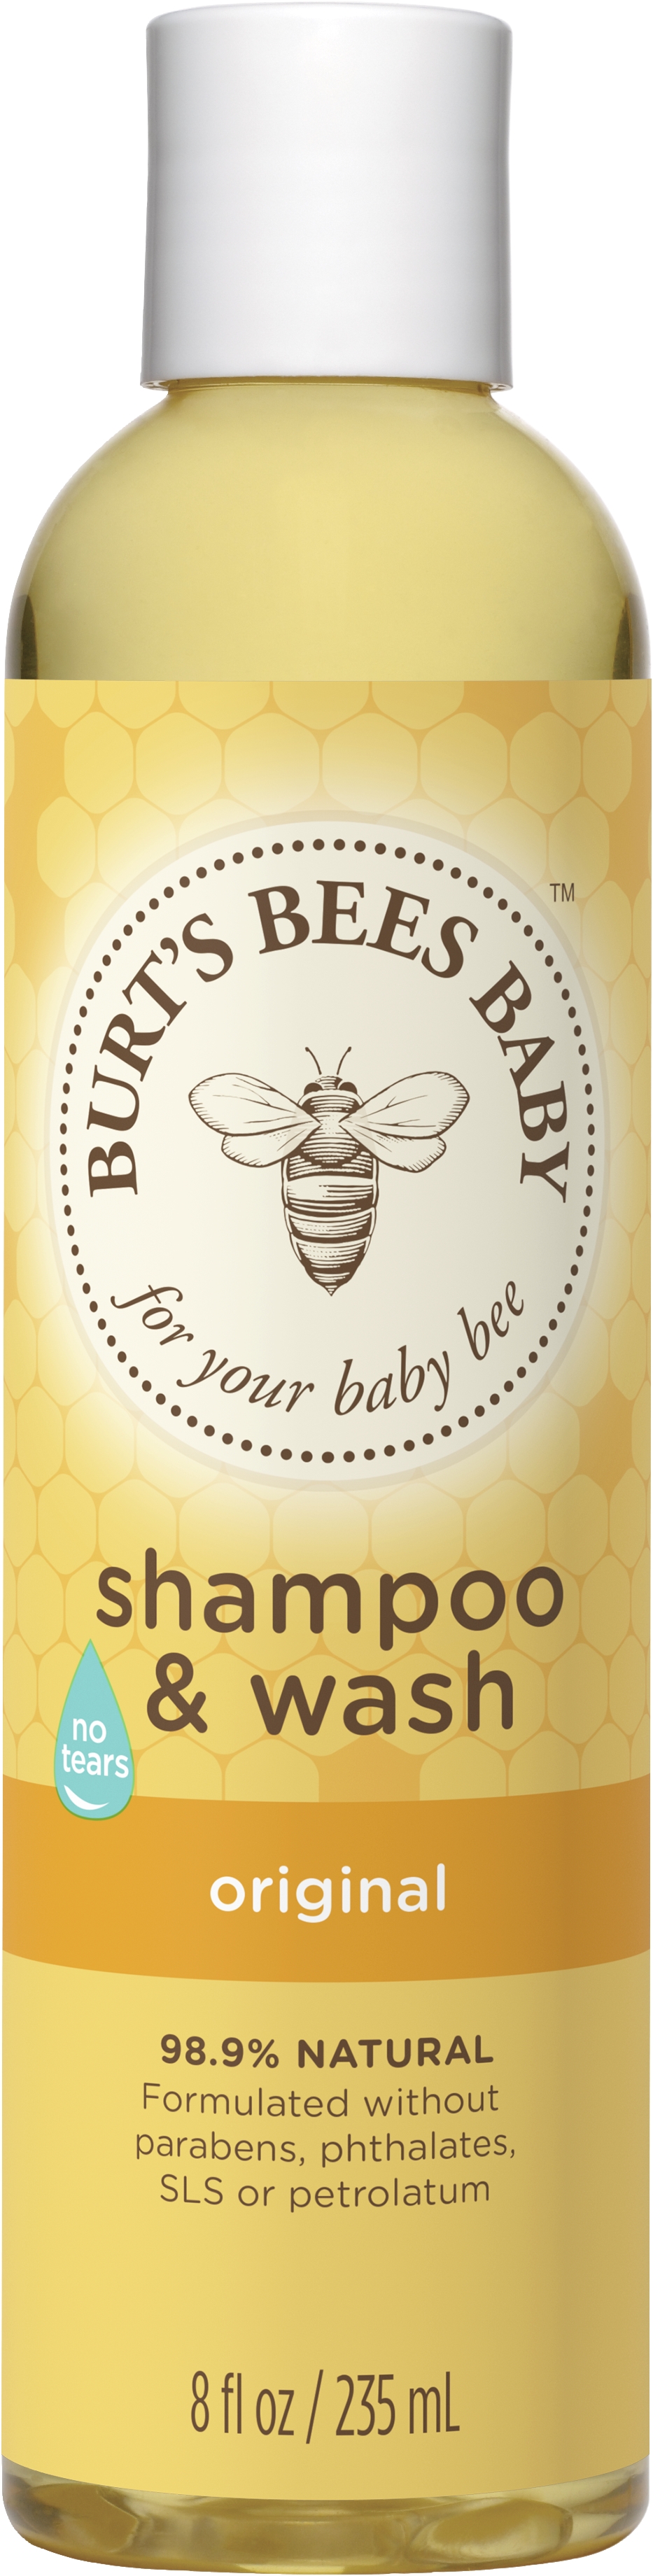 Burt's Bees Baby Shampoo & Wash, Original & Tear Free, 8 fl oz - image 1 of 5